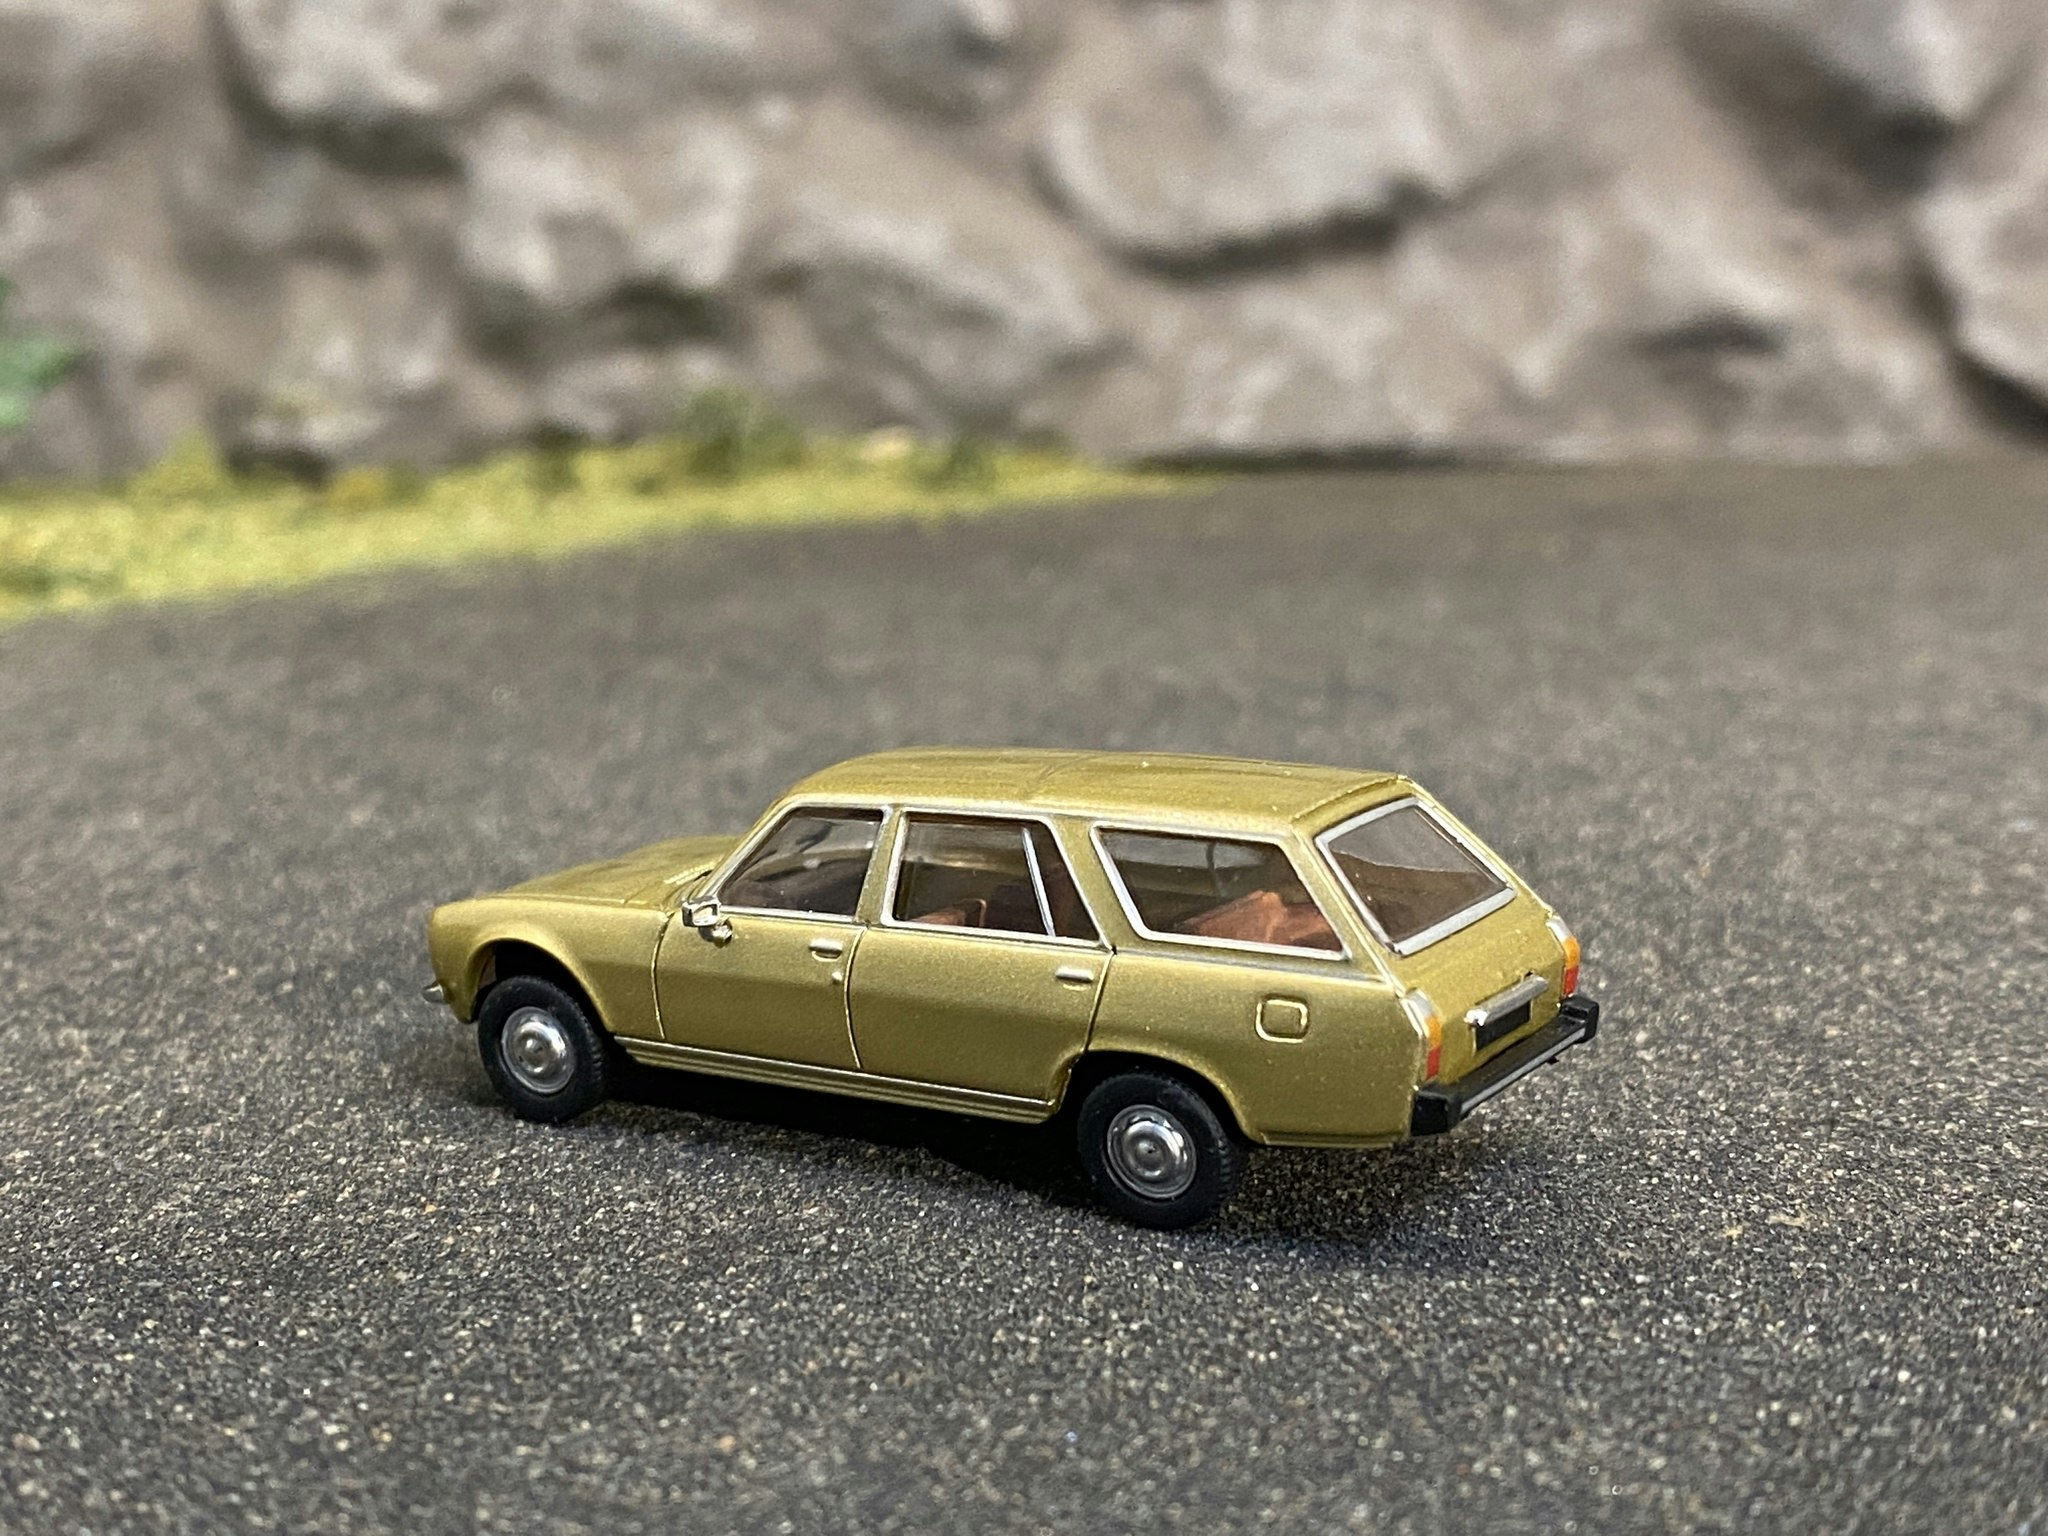 Skala 1/87 - Peugeot 504 Break, Guld metallic från PCX87